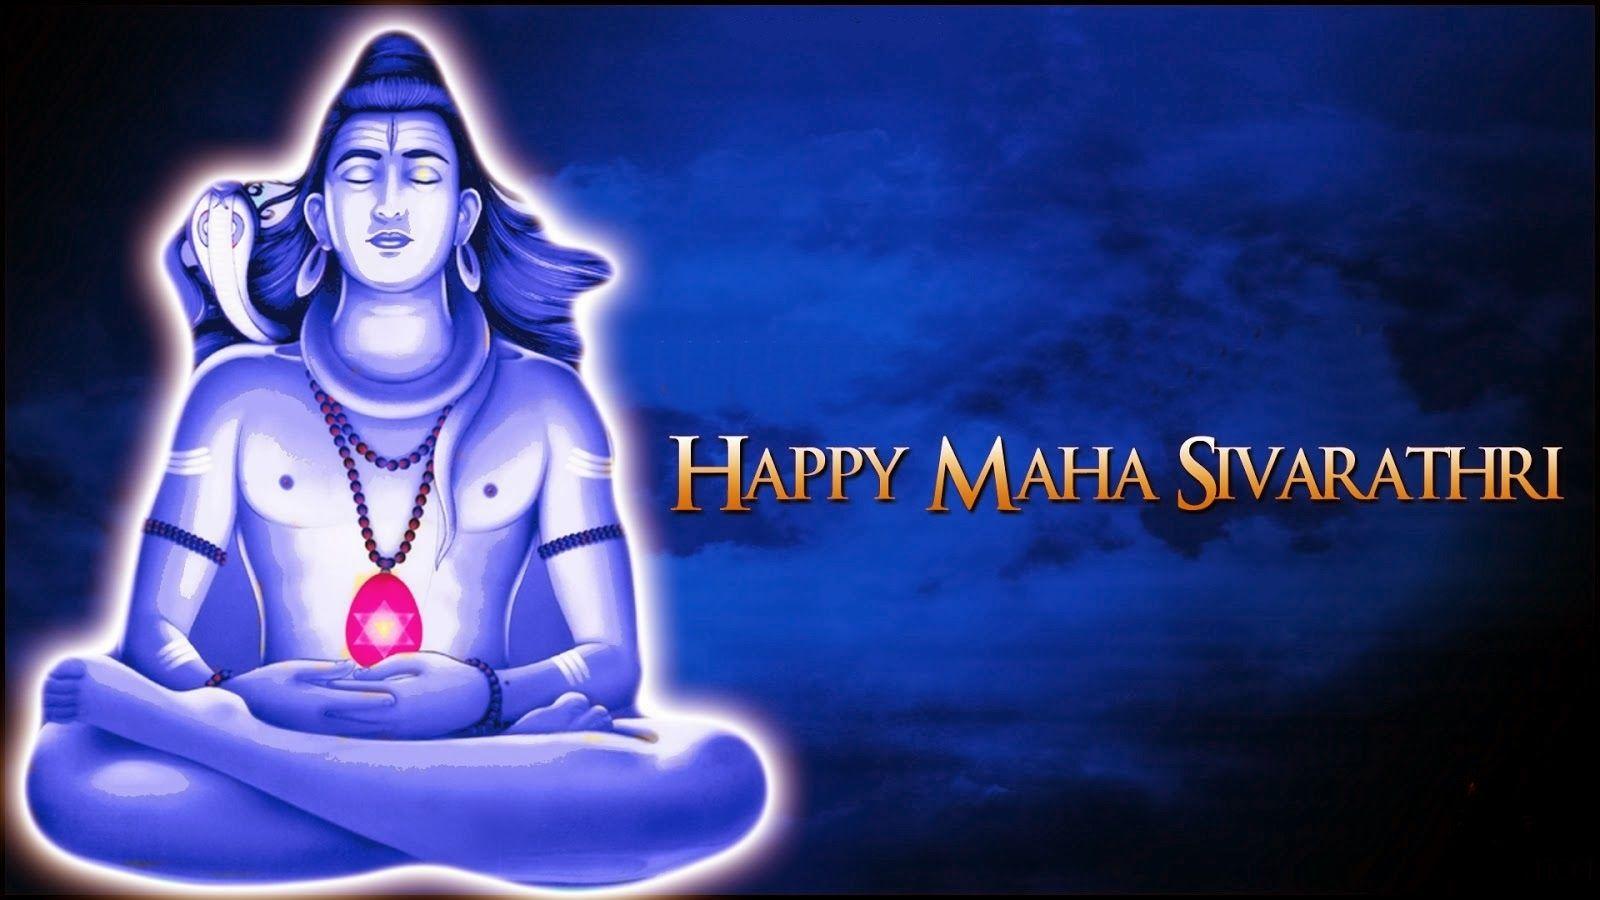 Happy Maha Shivratri Image, Pics, Photo & Wallpaper